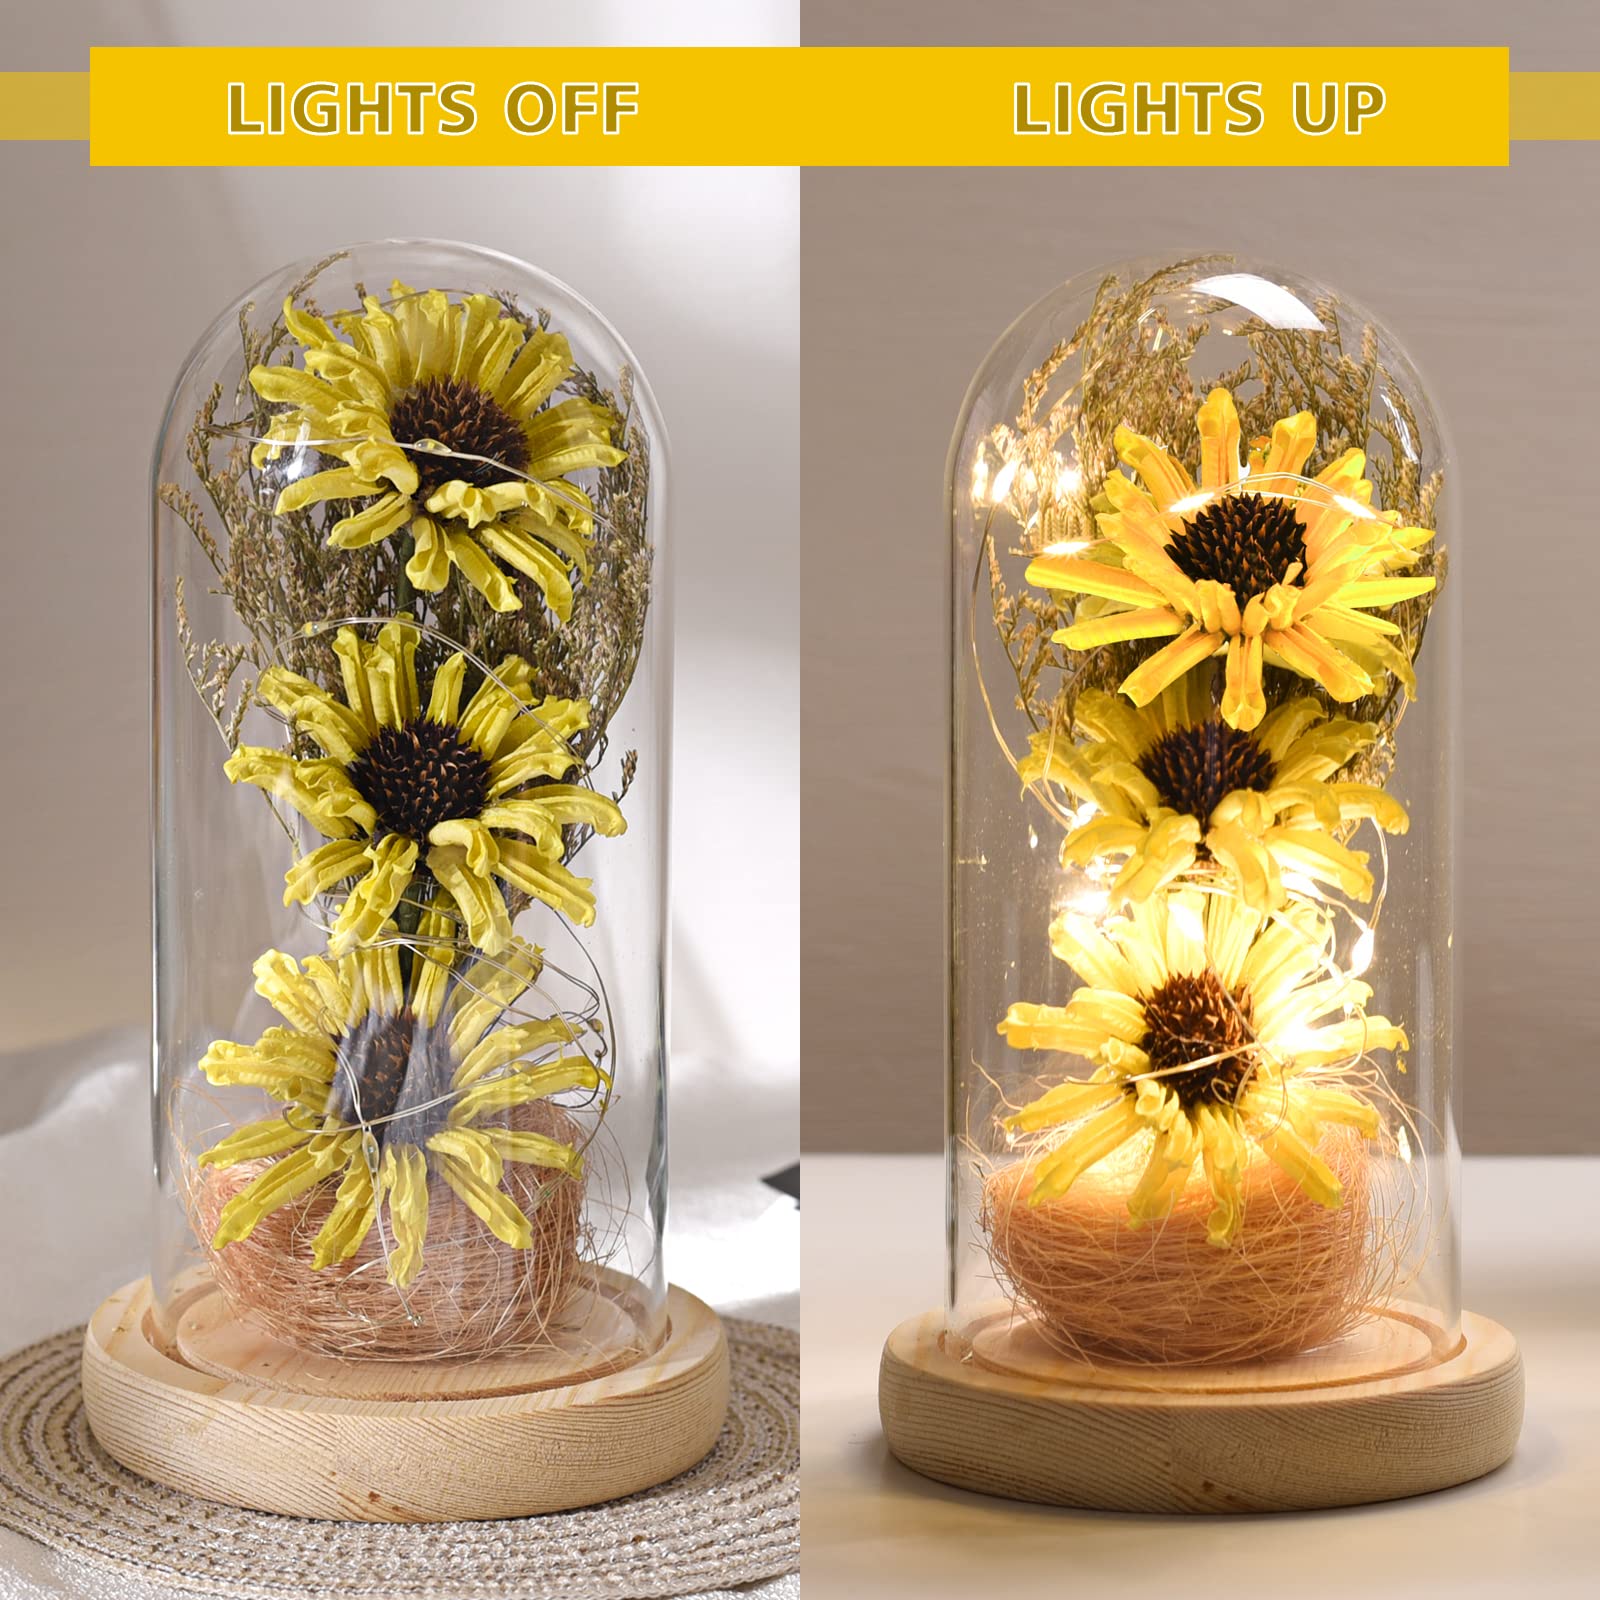 QUELIEN quelien sunflower gifts for women,birthday gifts for her,sunflowers  artificial flowers in glass dome,unique gifts for xmas,va